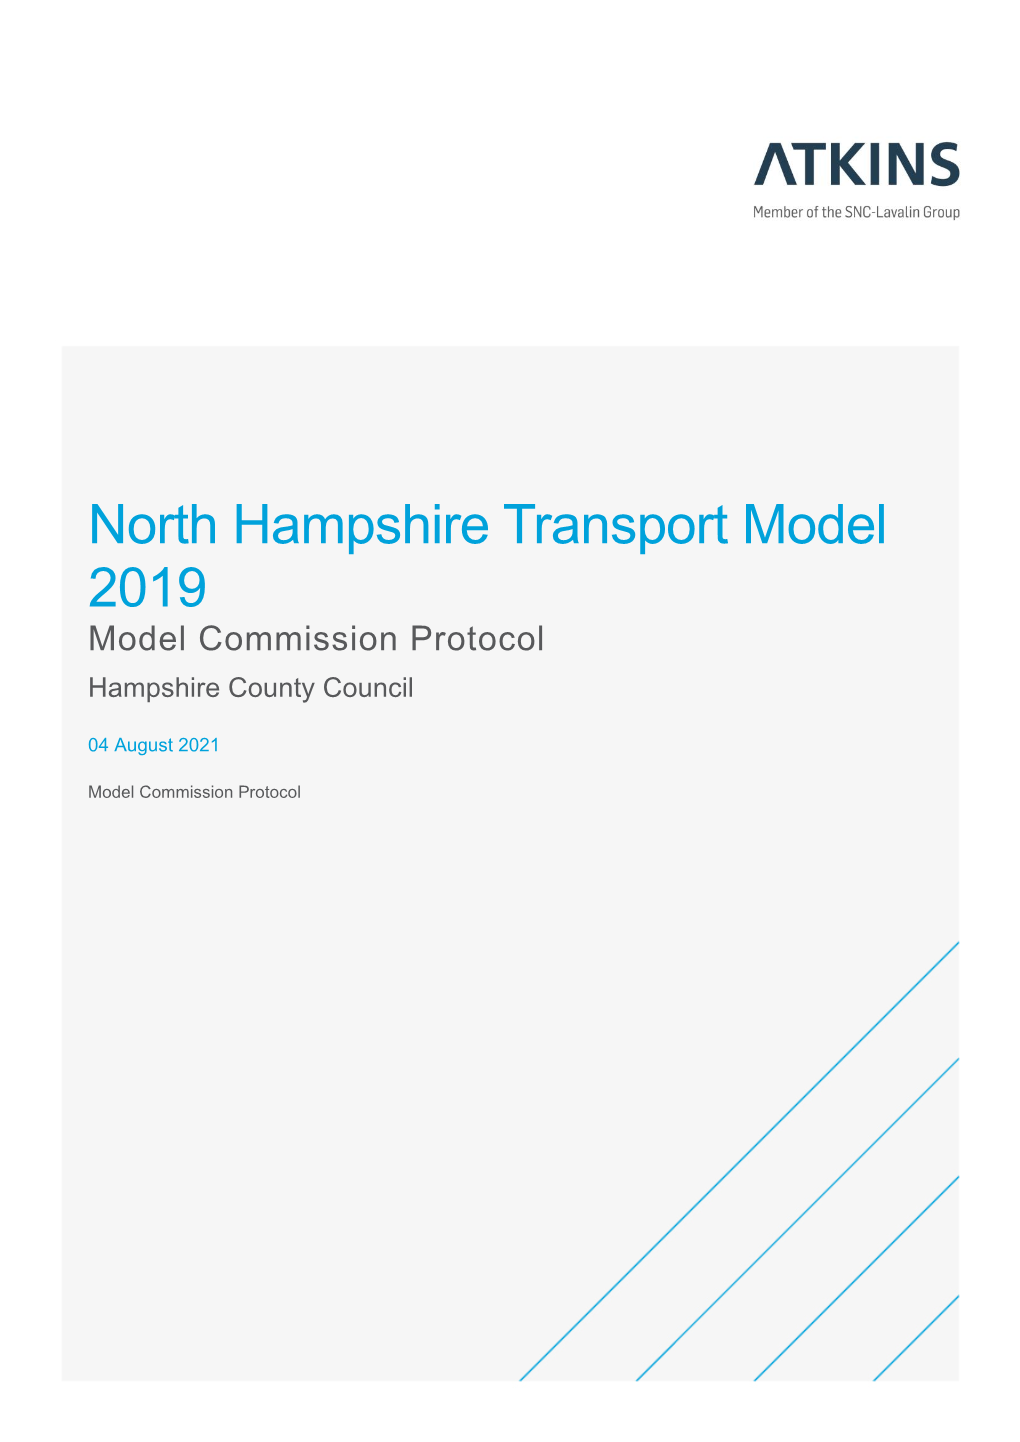 North Hampshire Transport Model 2019 Model Commission Protocol Hampshire County Council